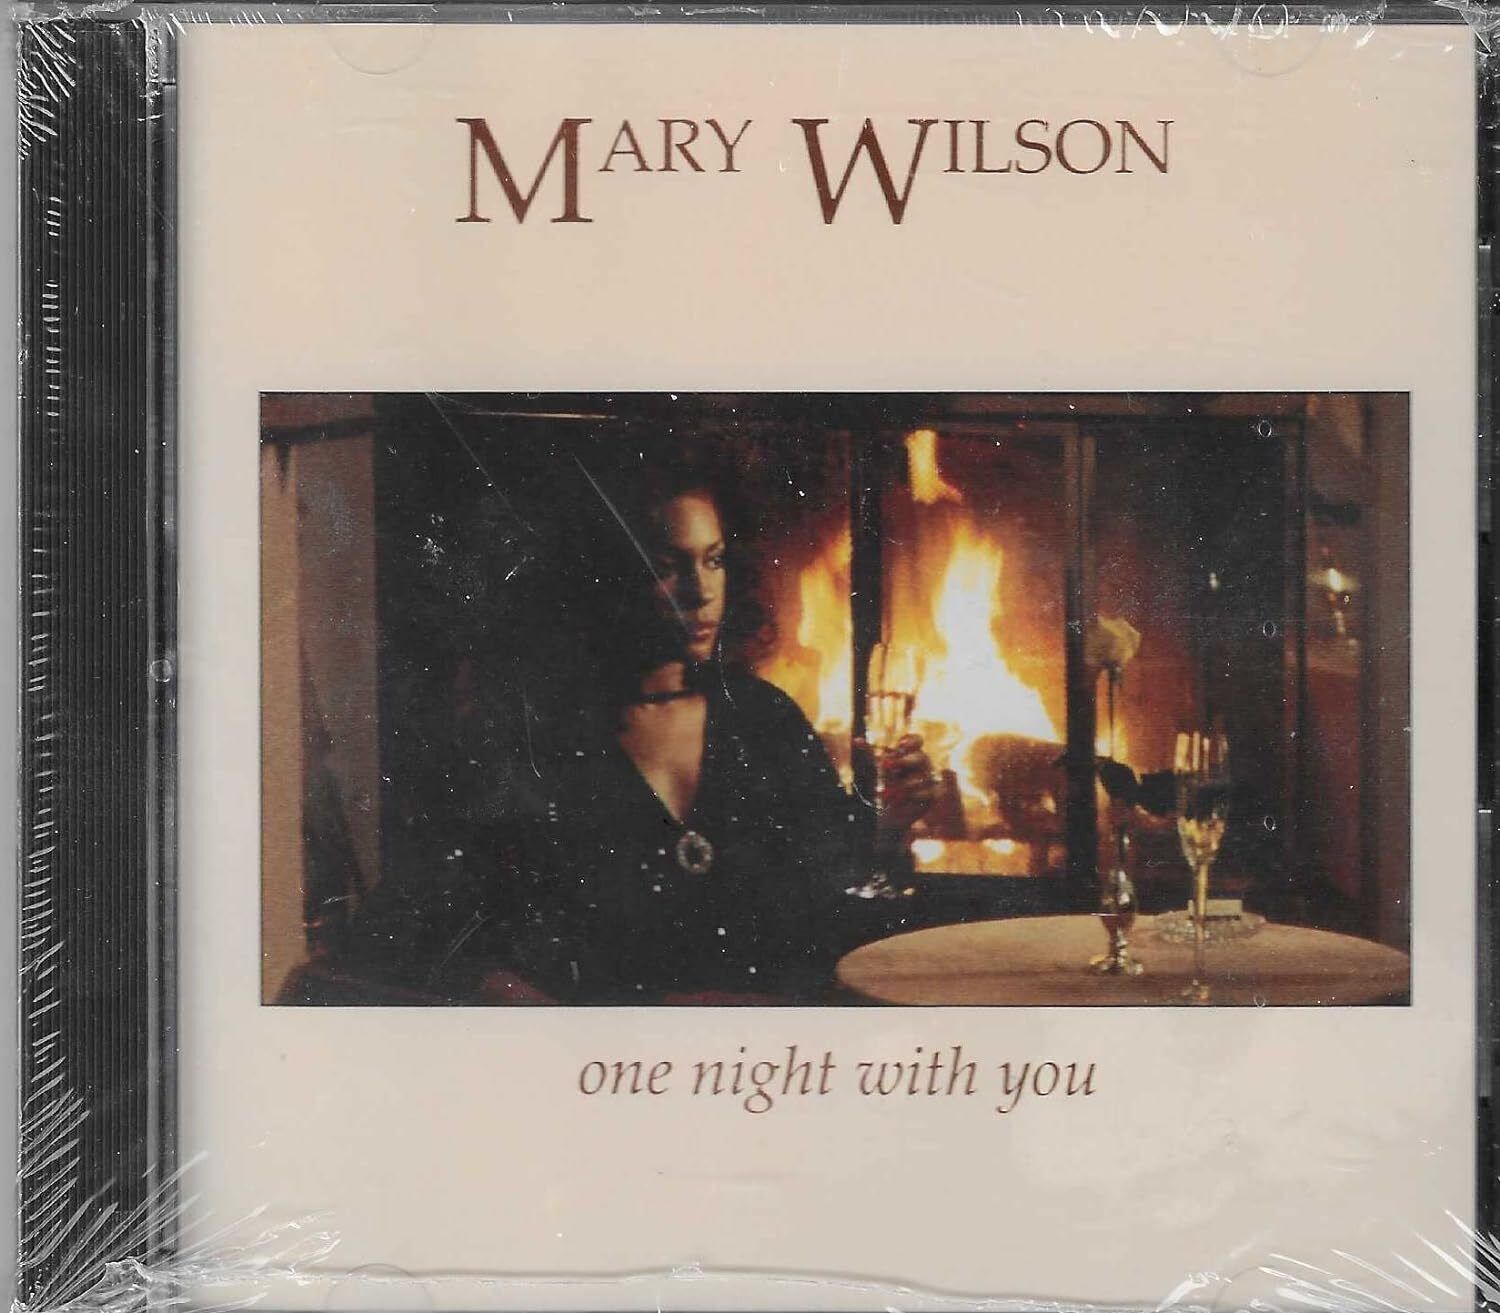 One Night With You [CD Single] - Mary Wilson - Music CD - Very Good